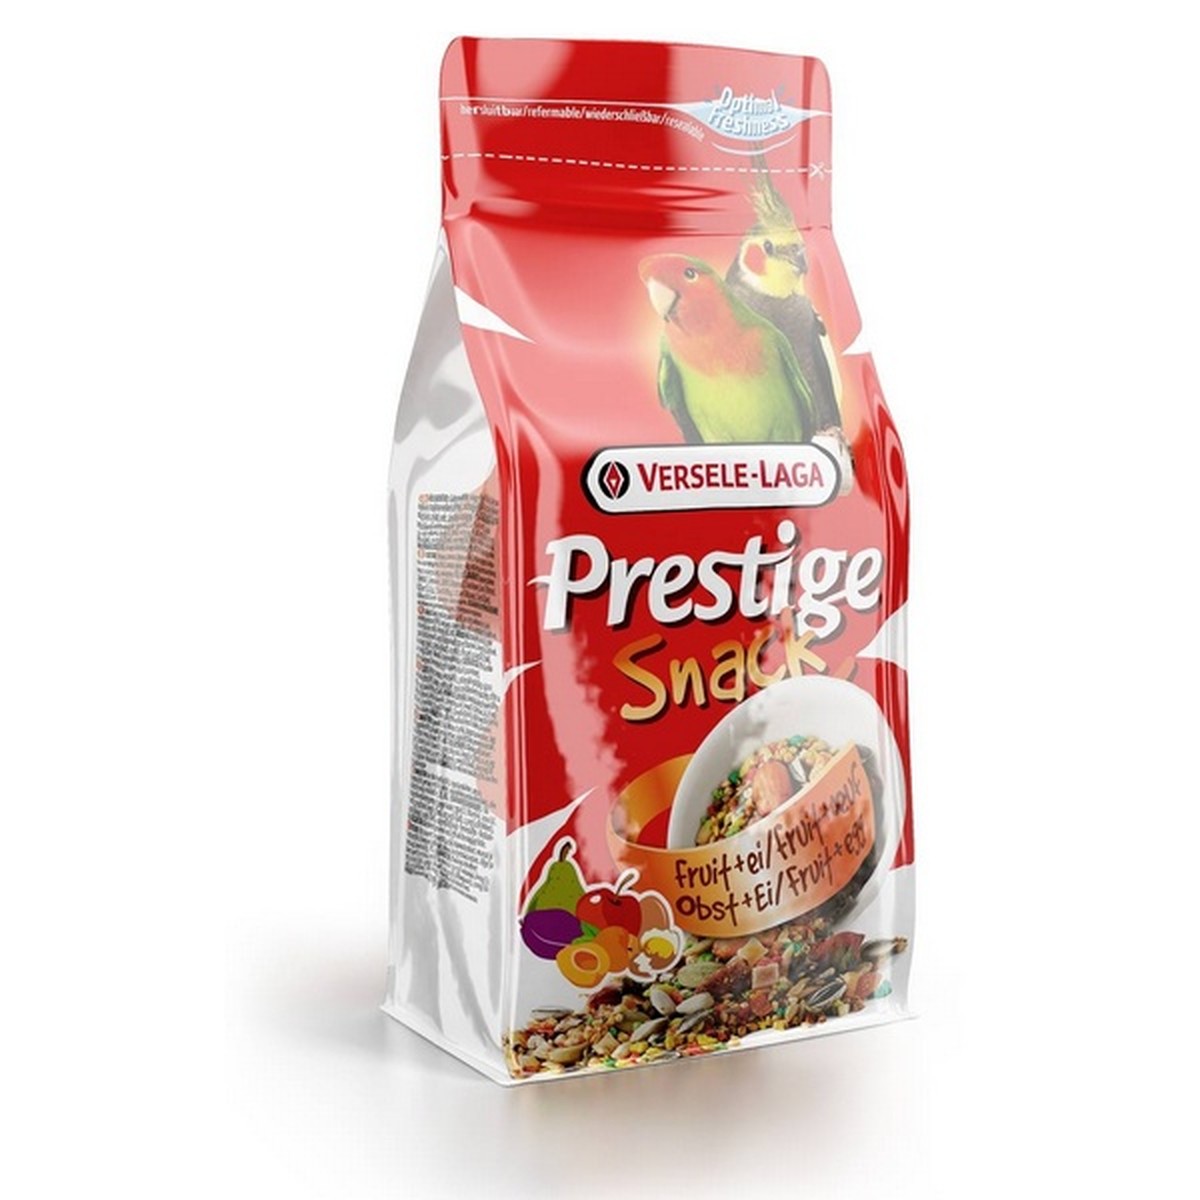   Prestige Snack Grandes Perruches. 125 g  125g